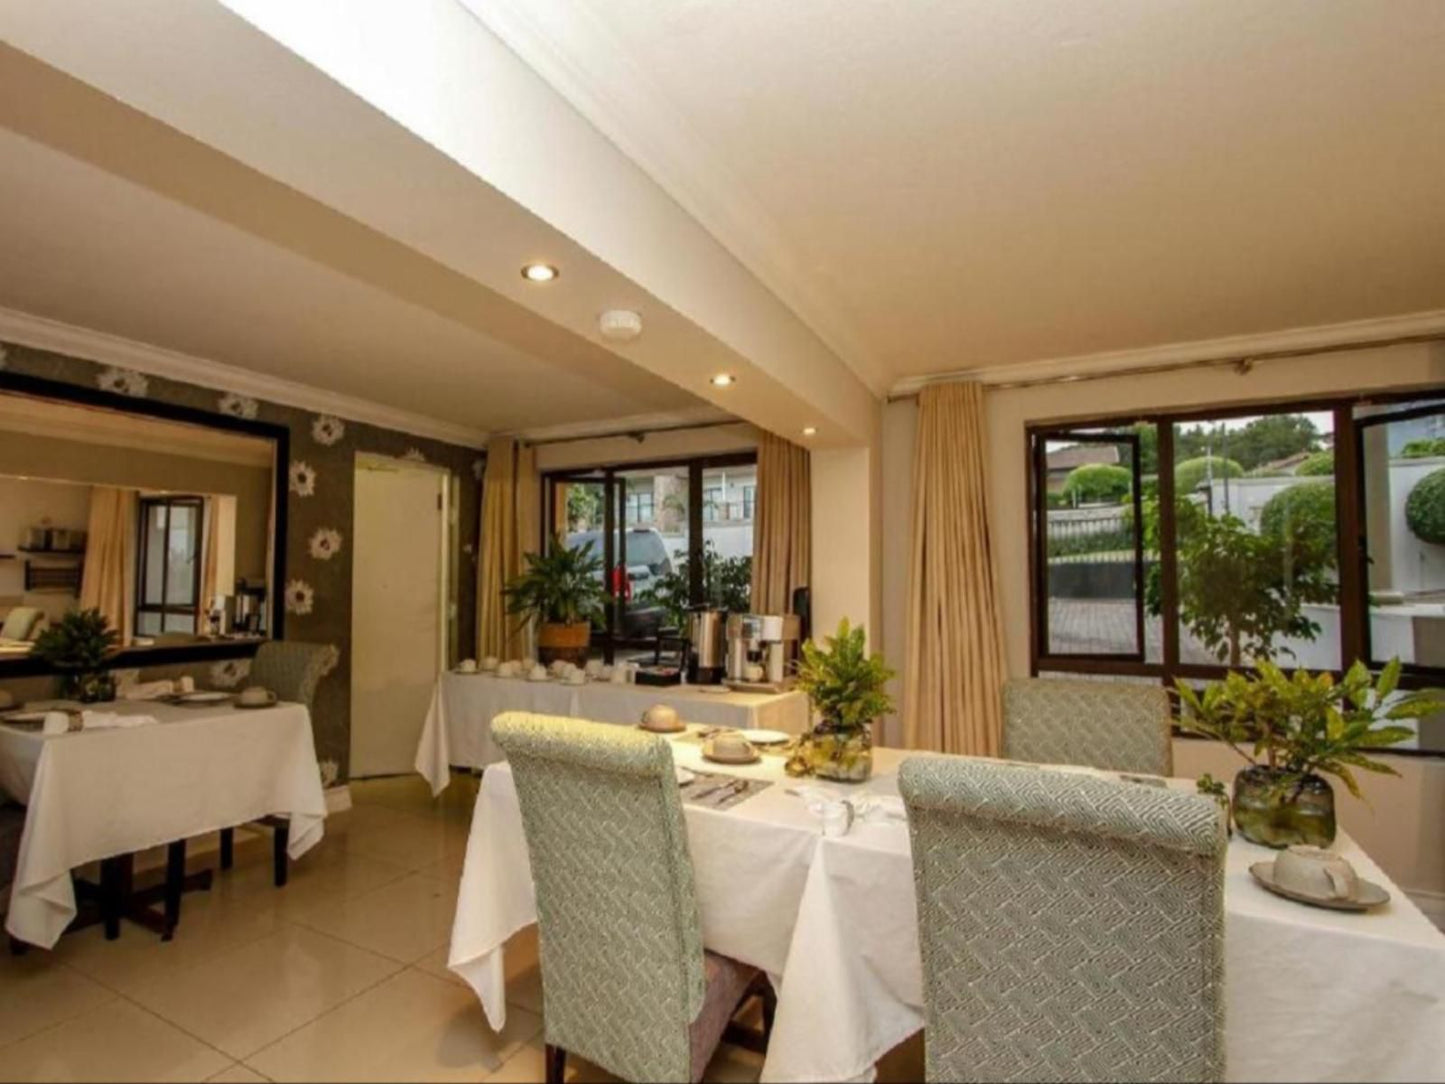 Sanchia Luxury Guesthouse Glenashley Durban Kwazulu Natal South Africa Sepia Tones